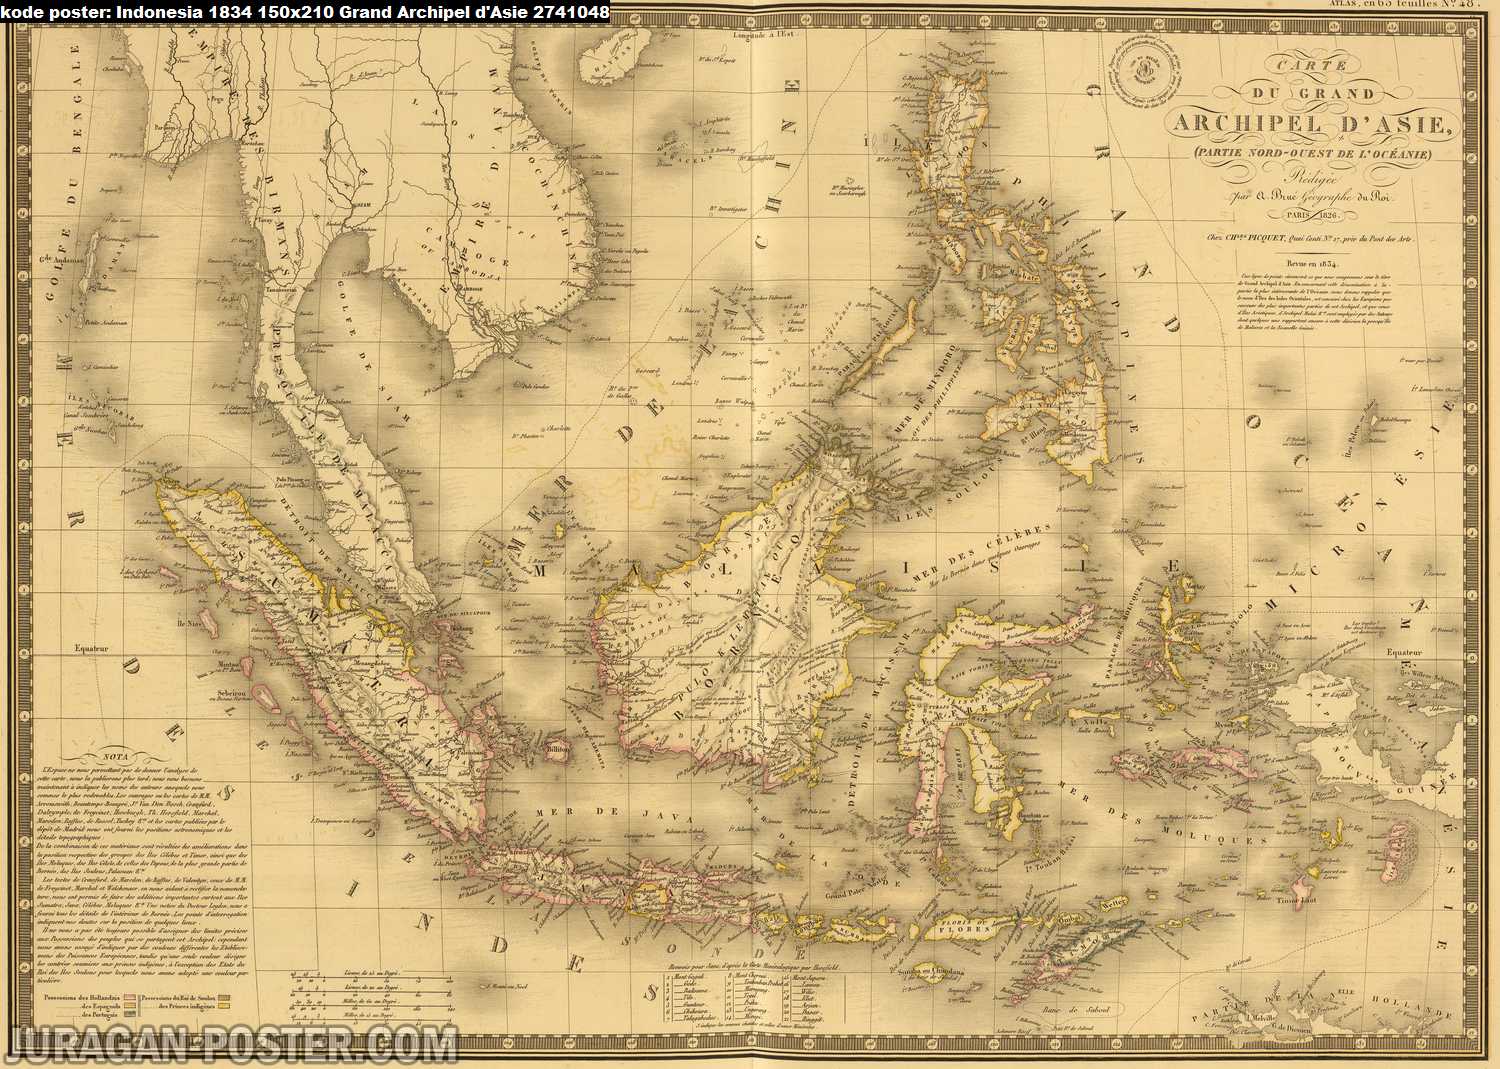 peta indonesia kuno tahun 1834